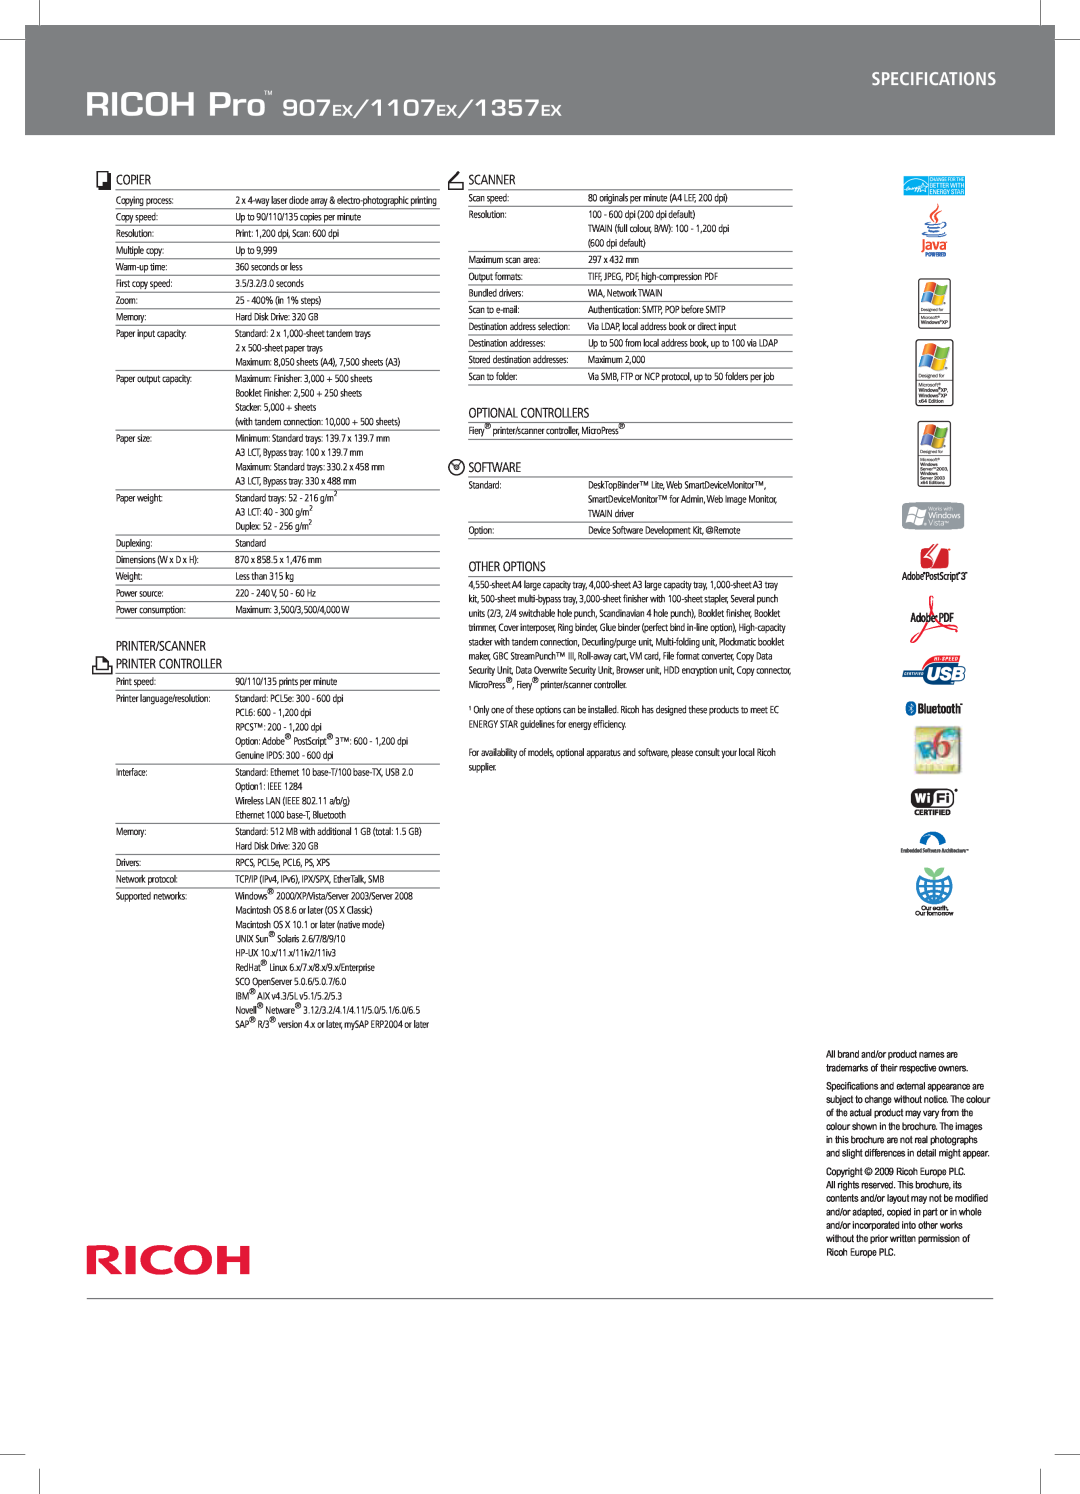 Ricoh manual 907EX/1107EX/1357EX, Specifications 